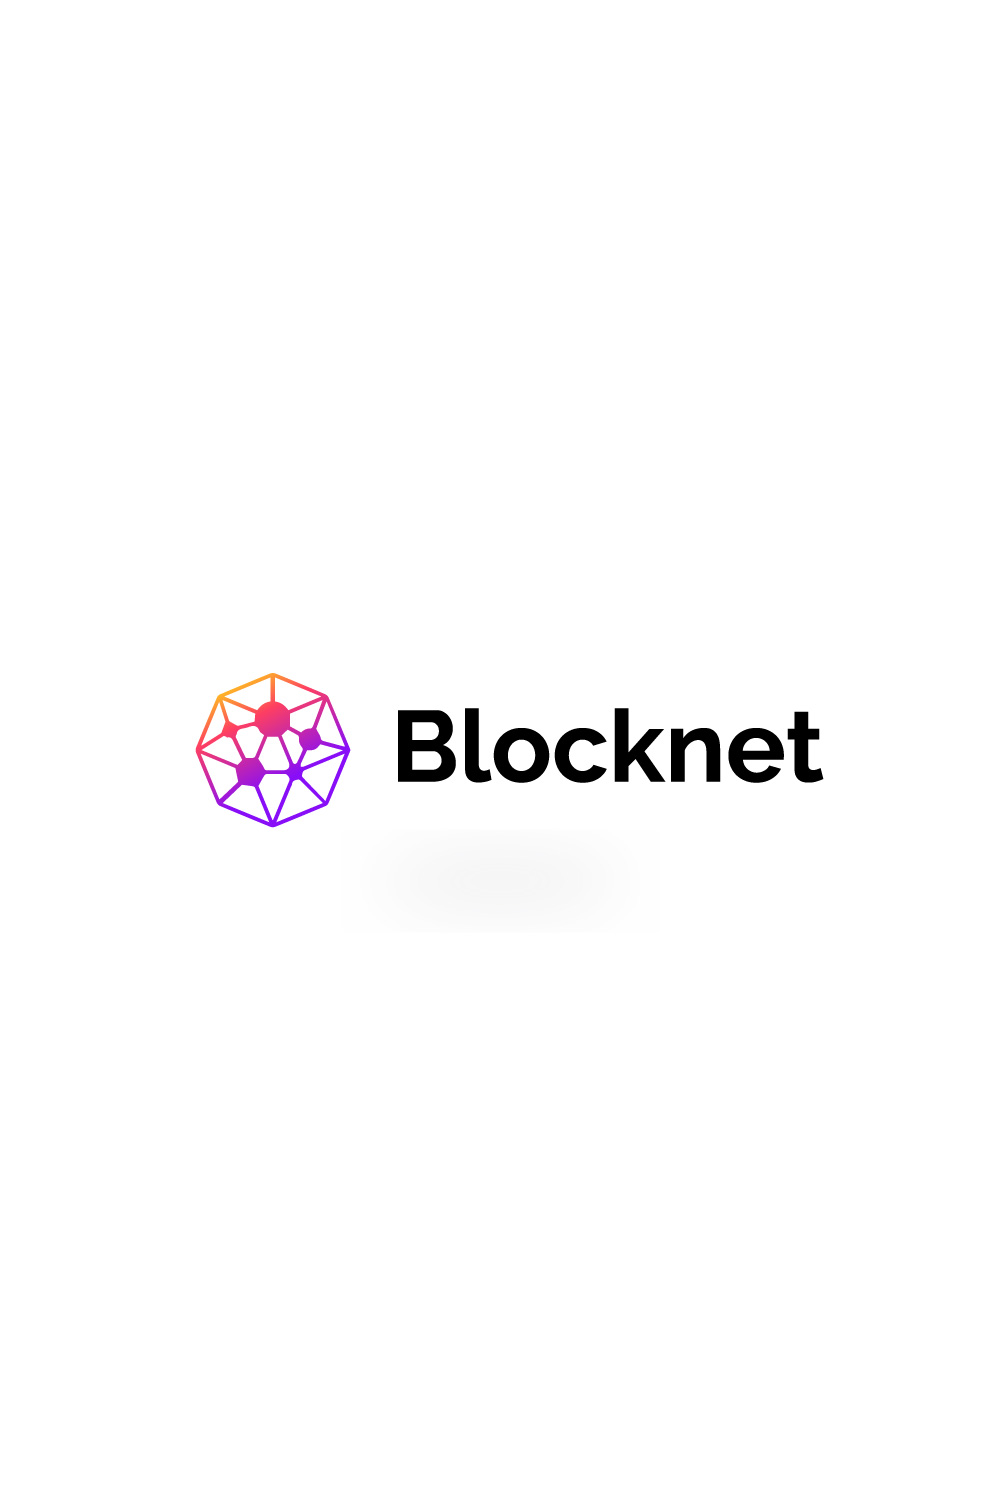 Blockchain Logo - Blockchain Technology - Decentralized Finance pinterest preview image.